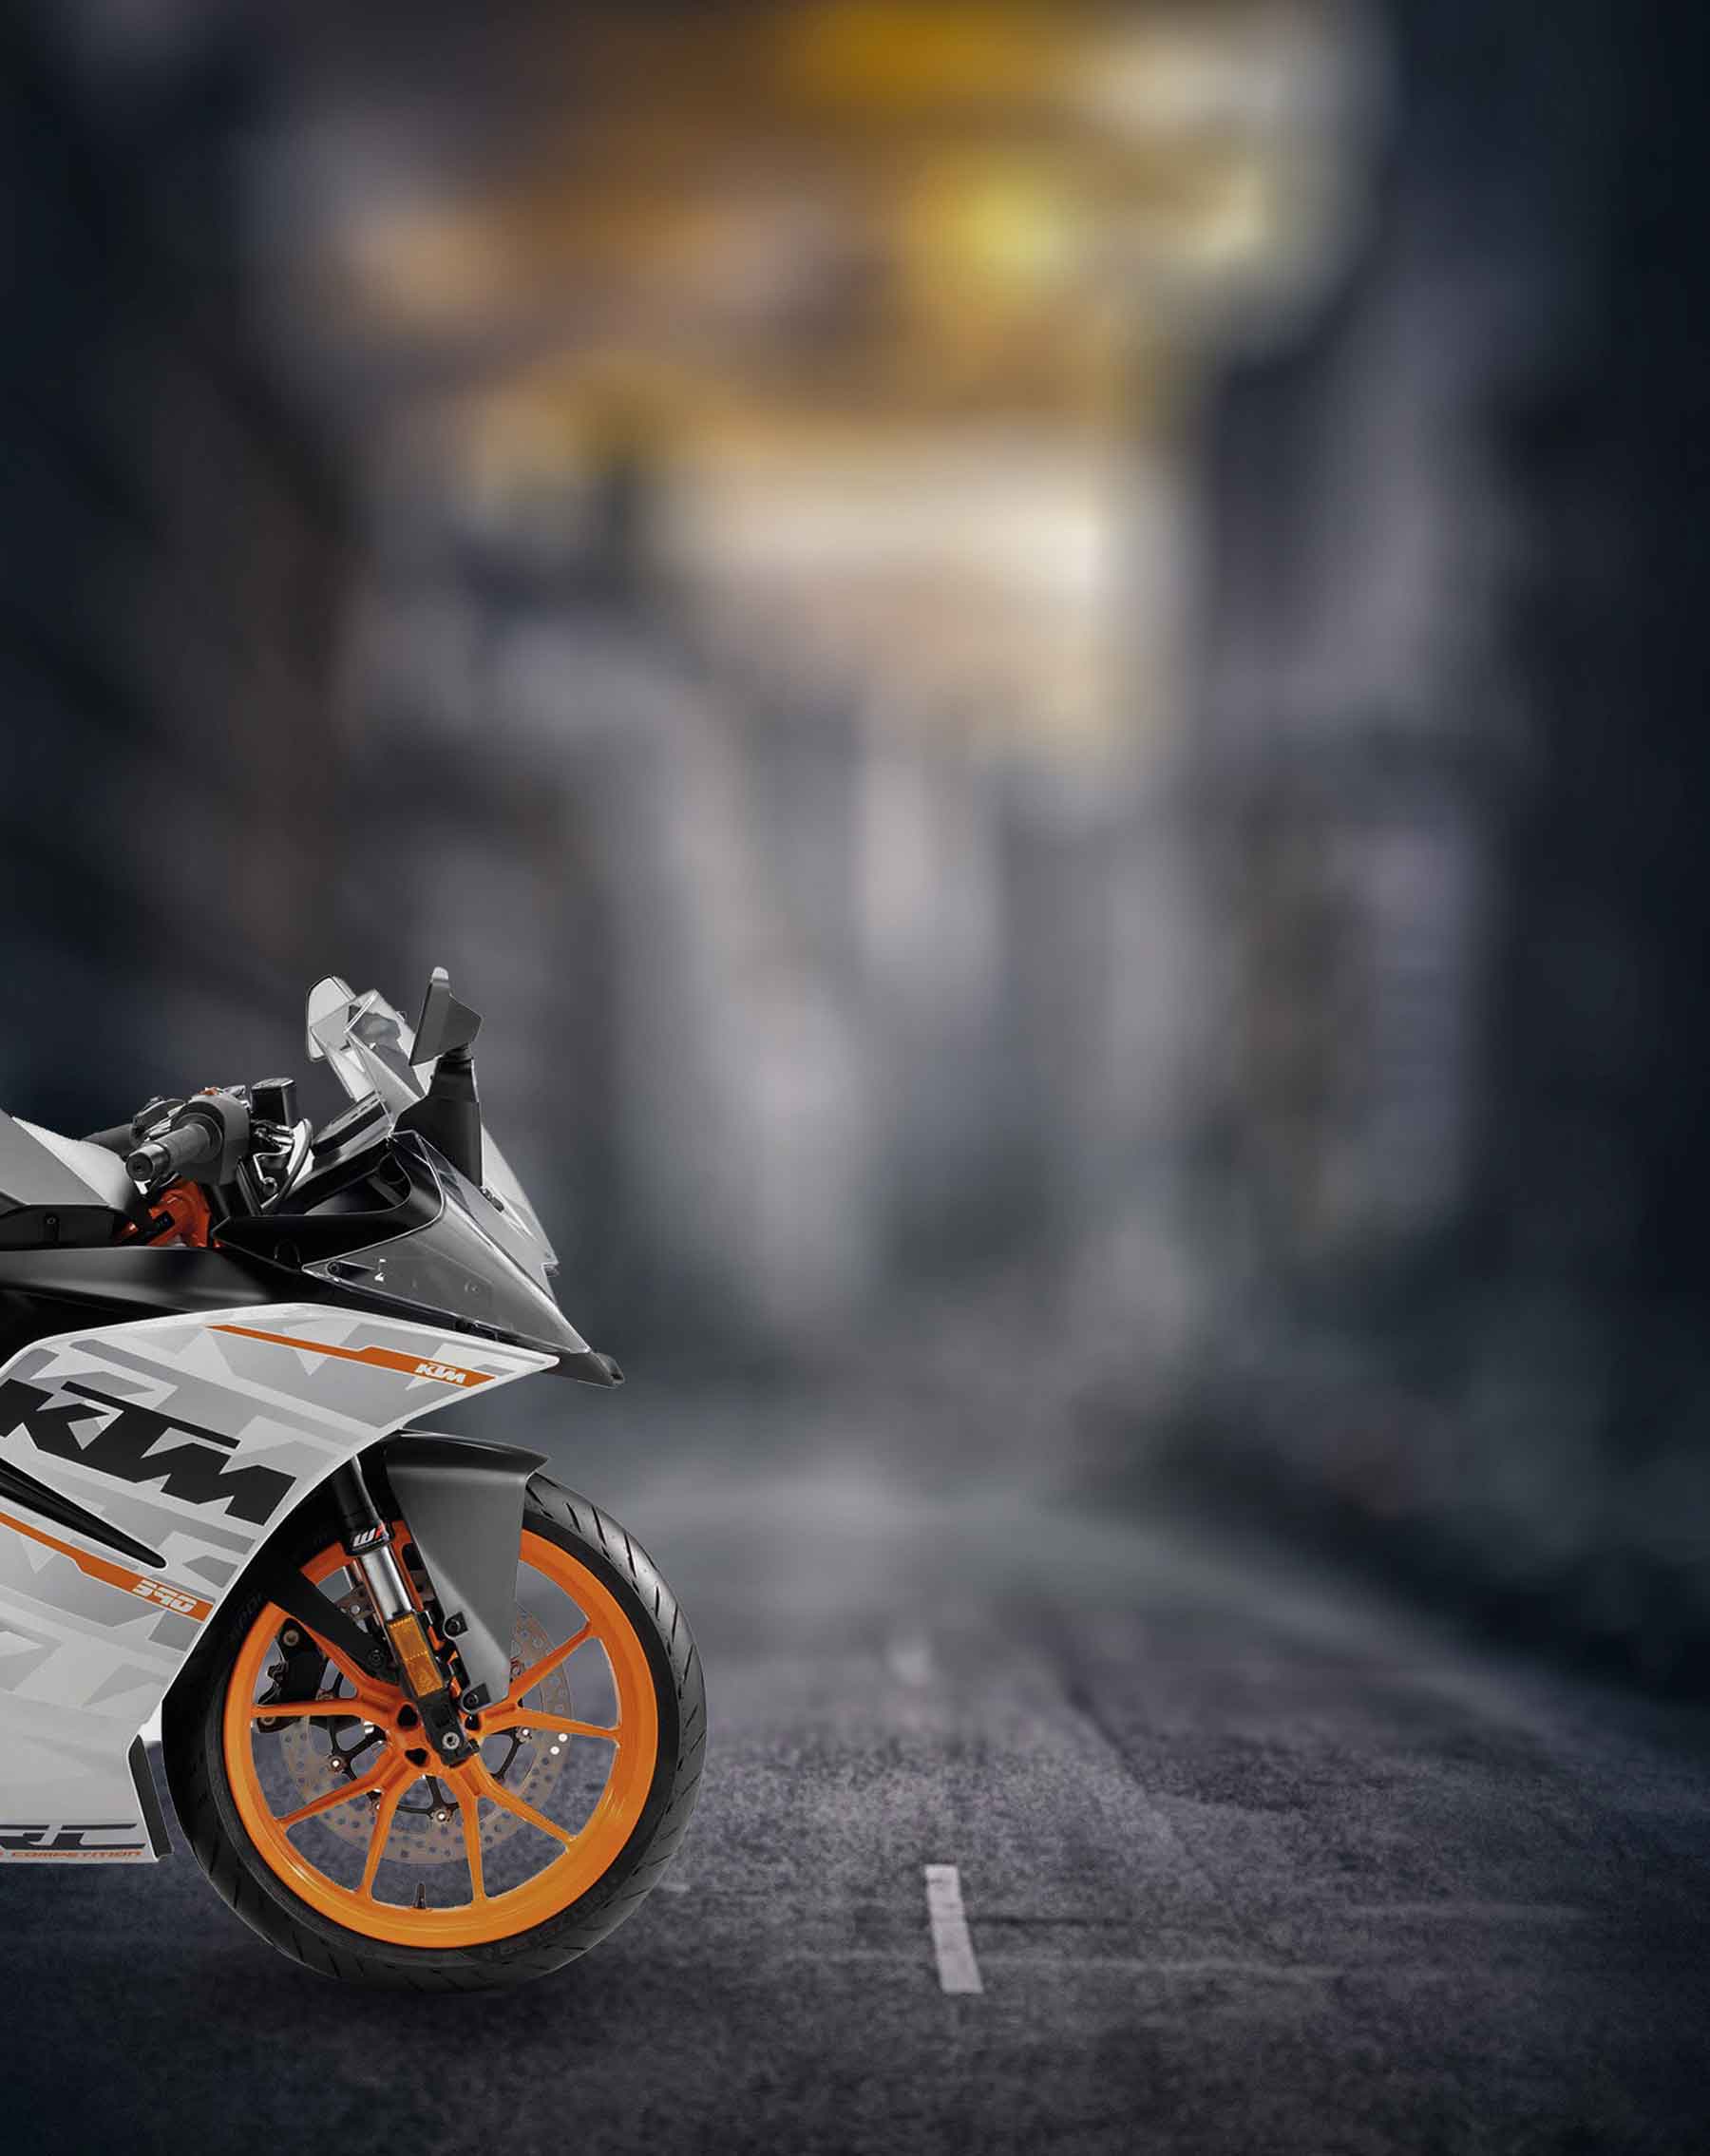 KTM Bike CB Blur Background Free Stock Image [ Download ]